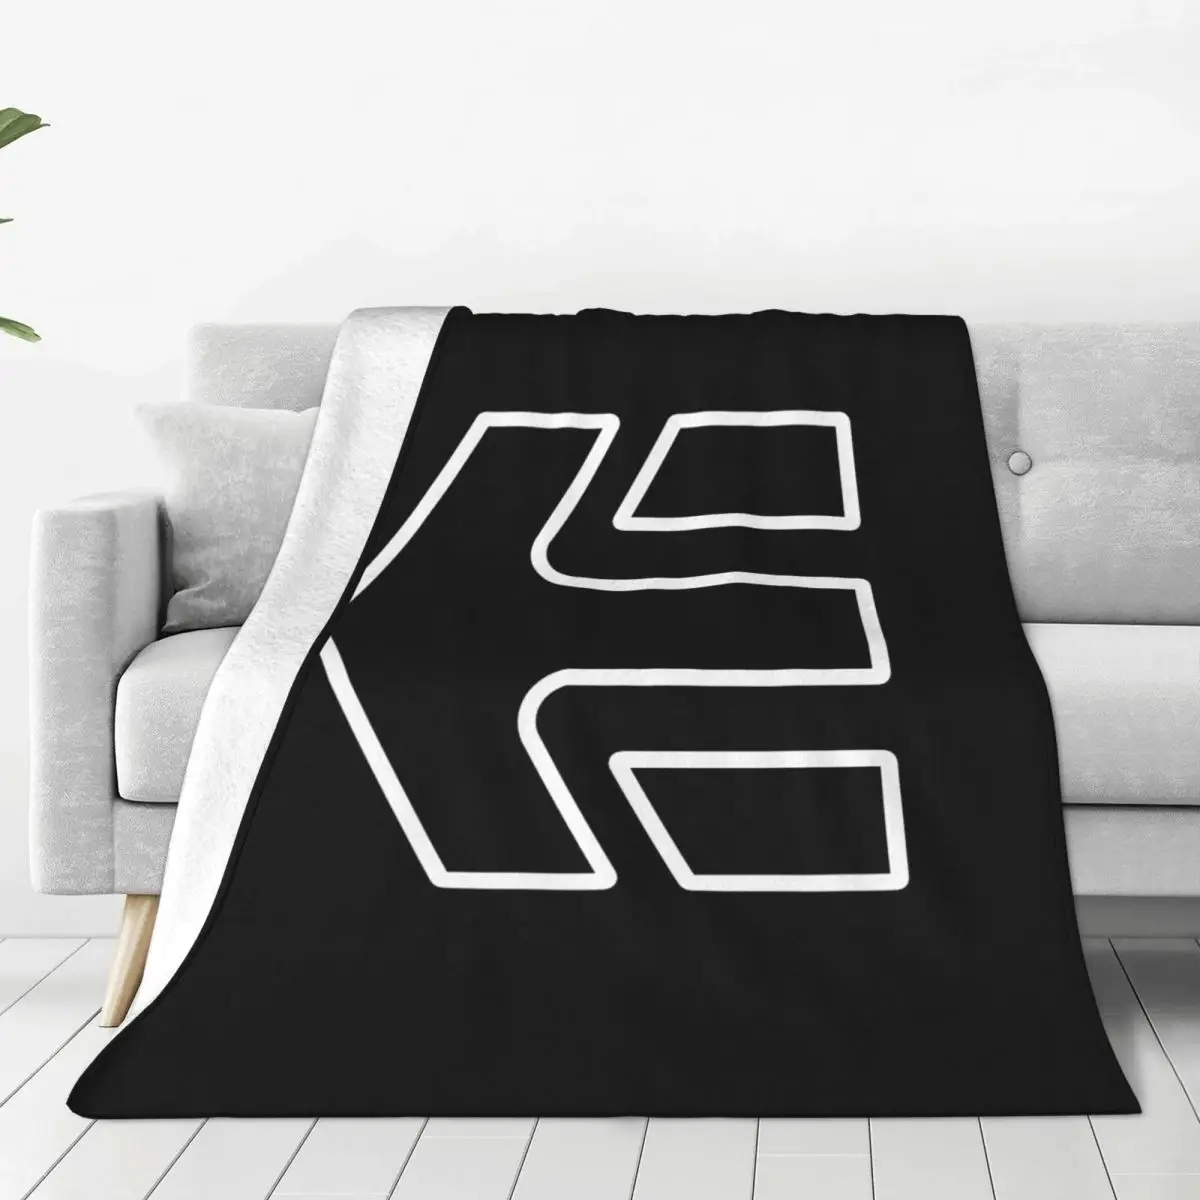 

Etnies Skate Bmx Blanket Bed Soft Comforter Ultralight Throw Blanket minimalist the creative microfiber Anti-pilling washable